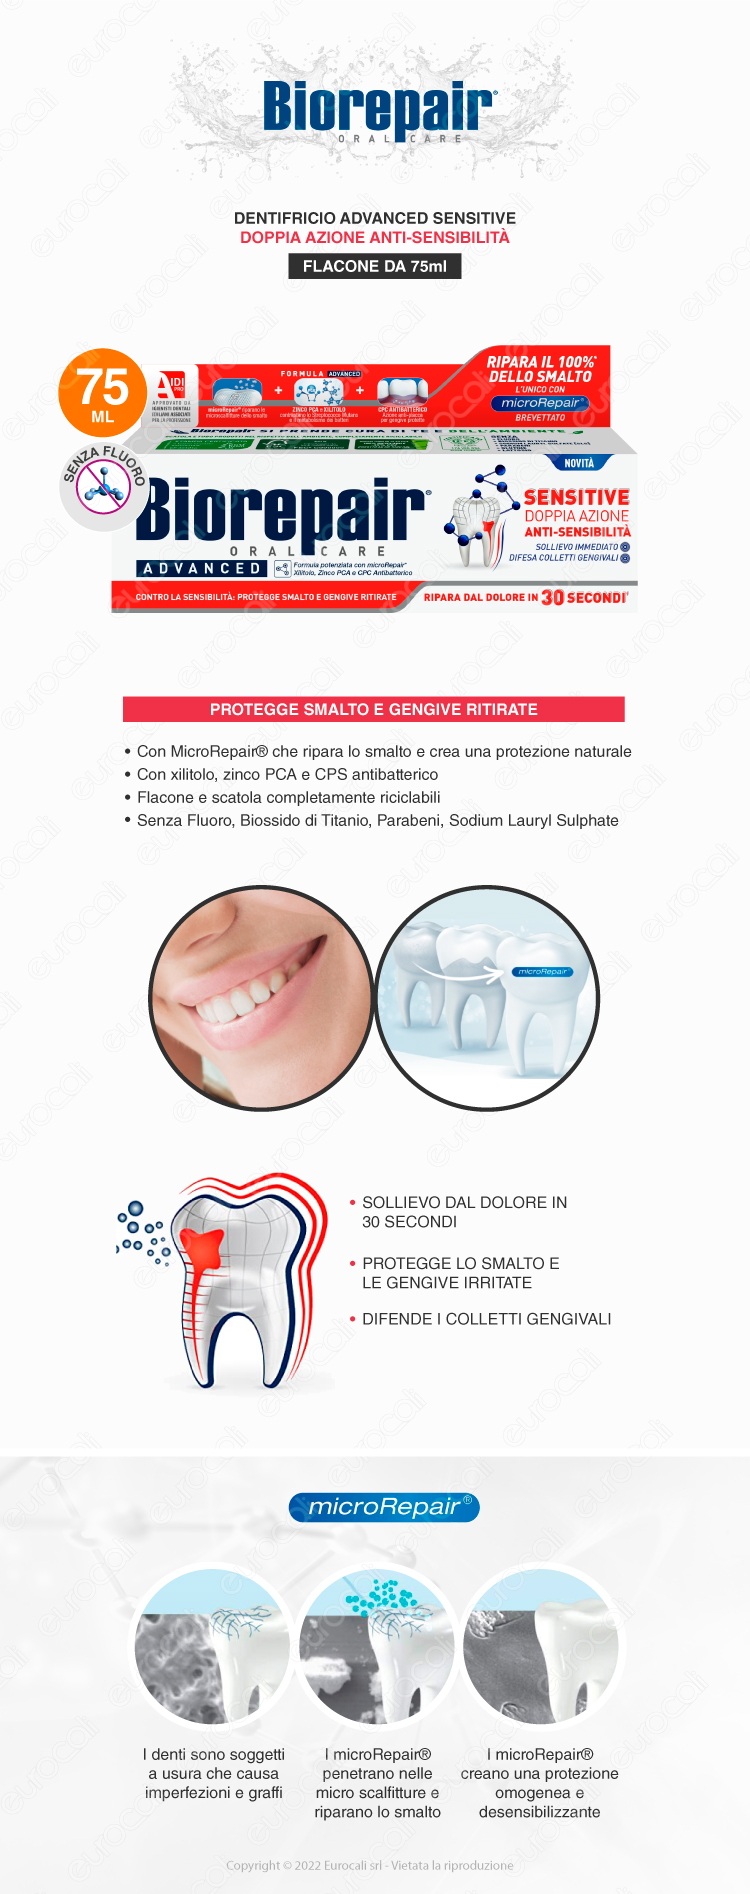 Biorepair advanced sensitive denti sensibili